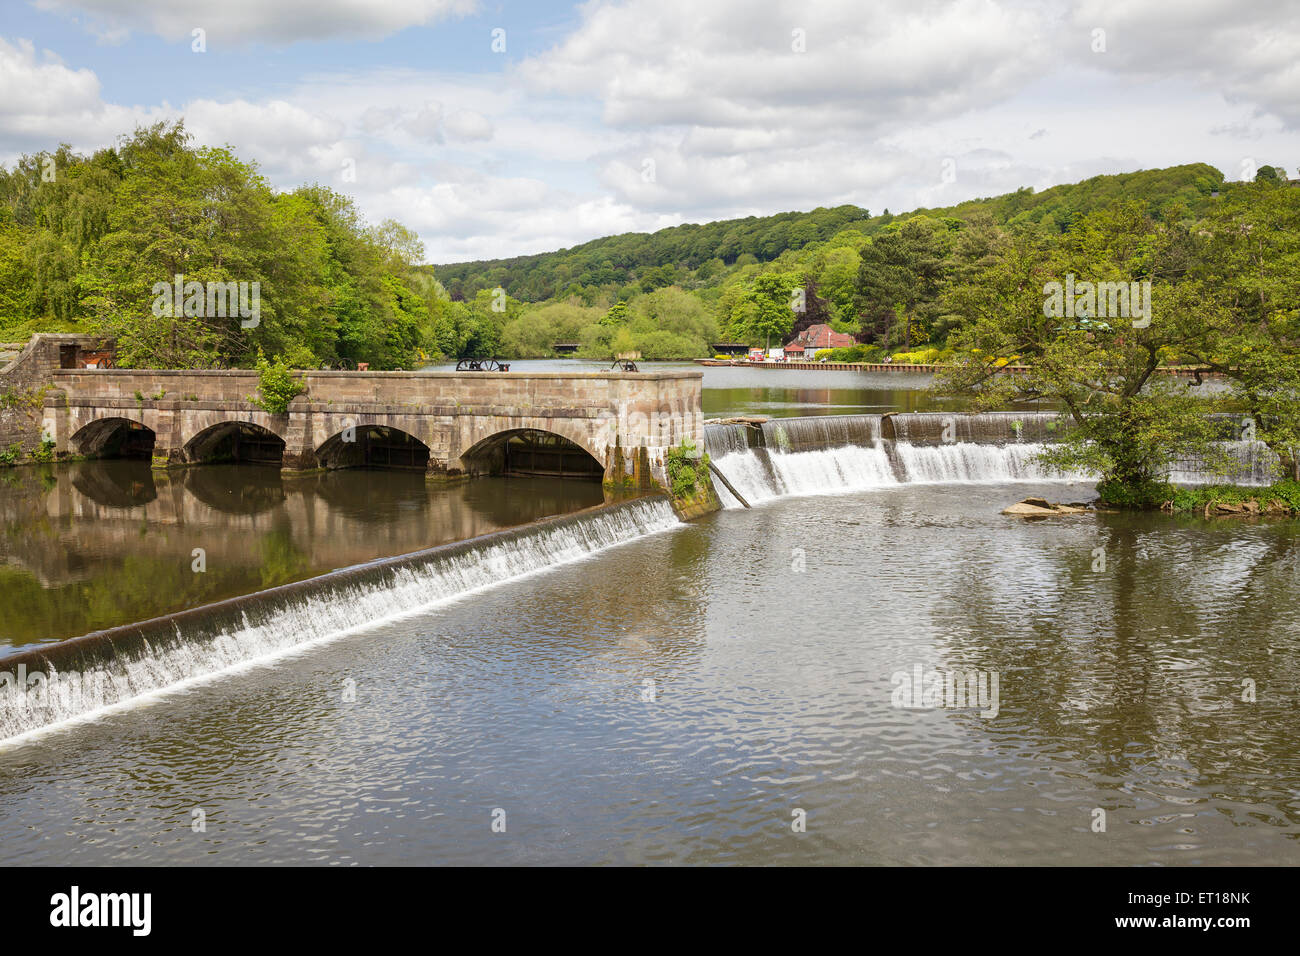 Weir and River Gardens, Belper, Derbyshire, England Stock Photo